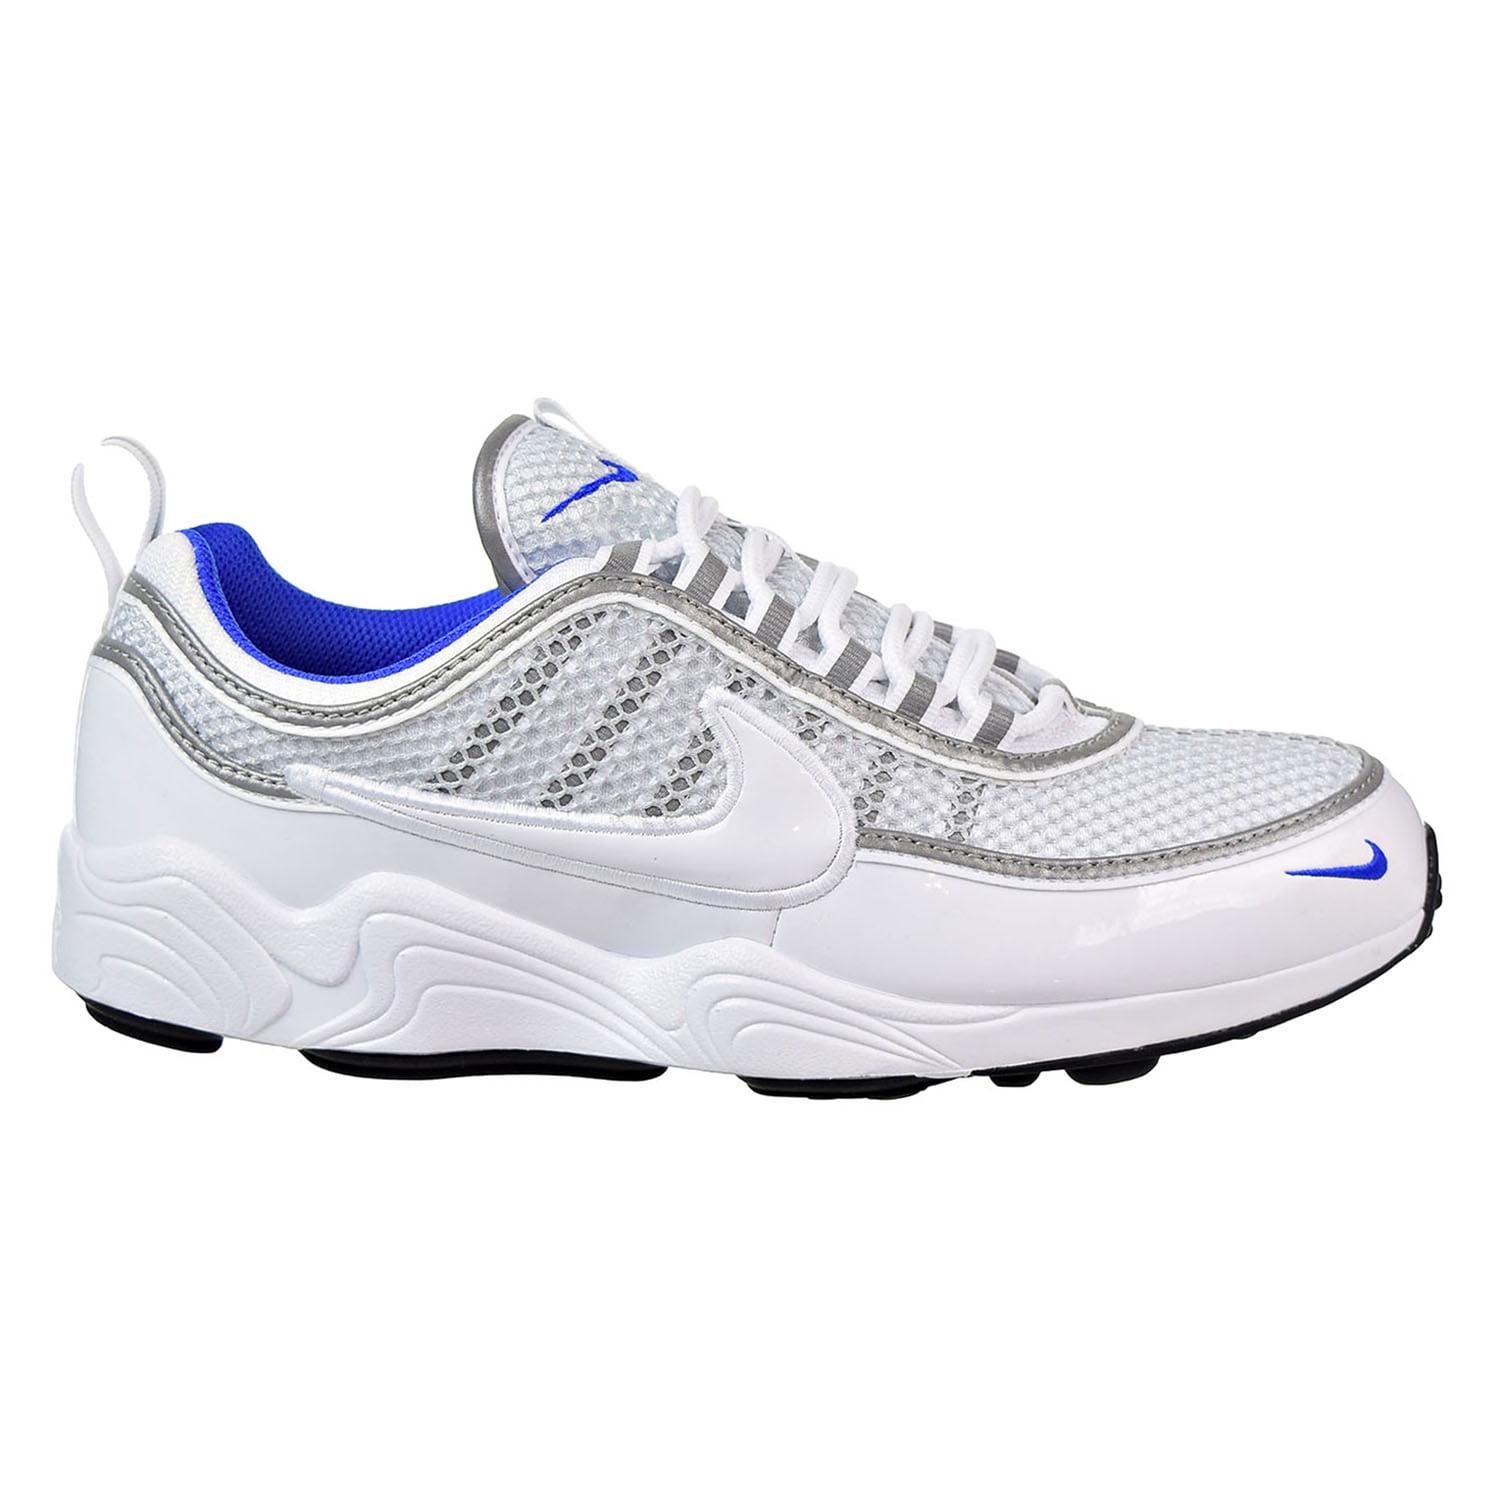 Nike Air Zoom '16 Men's Running Shoes White/White/Pure Platinum 926955-104 - Walmart.com